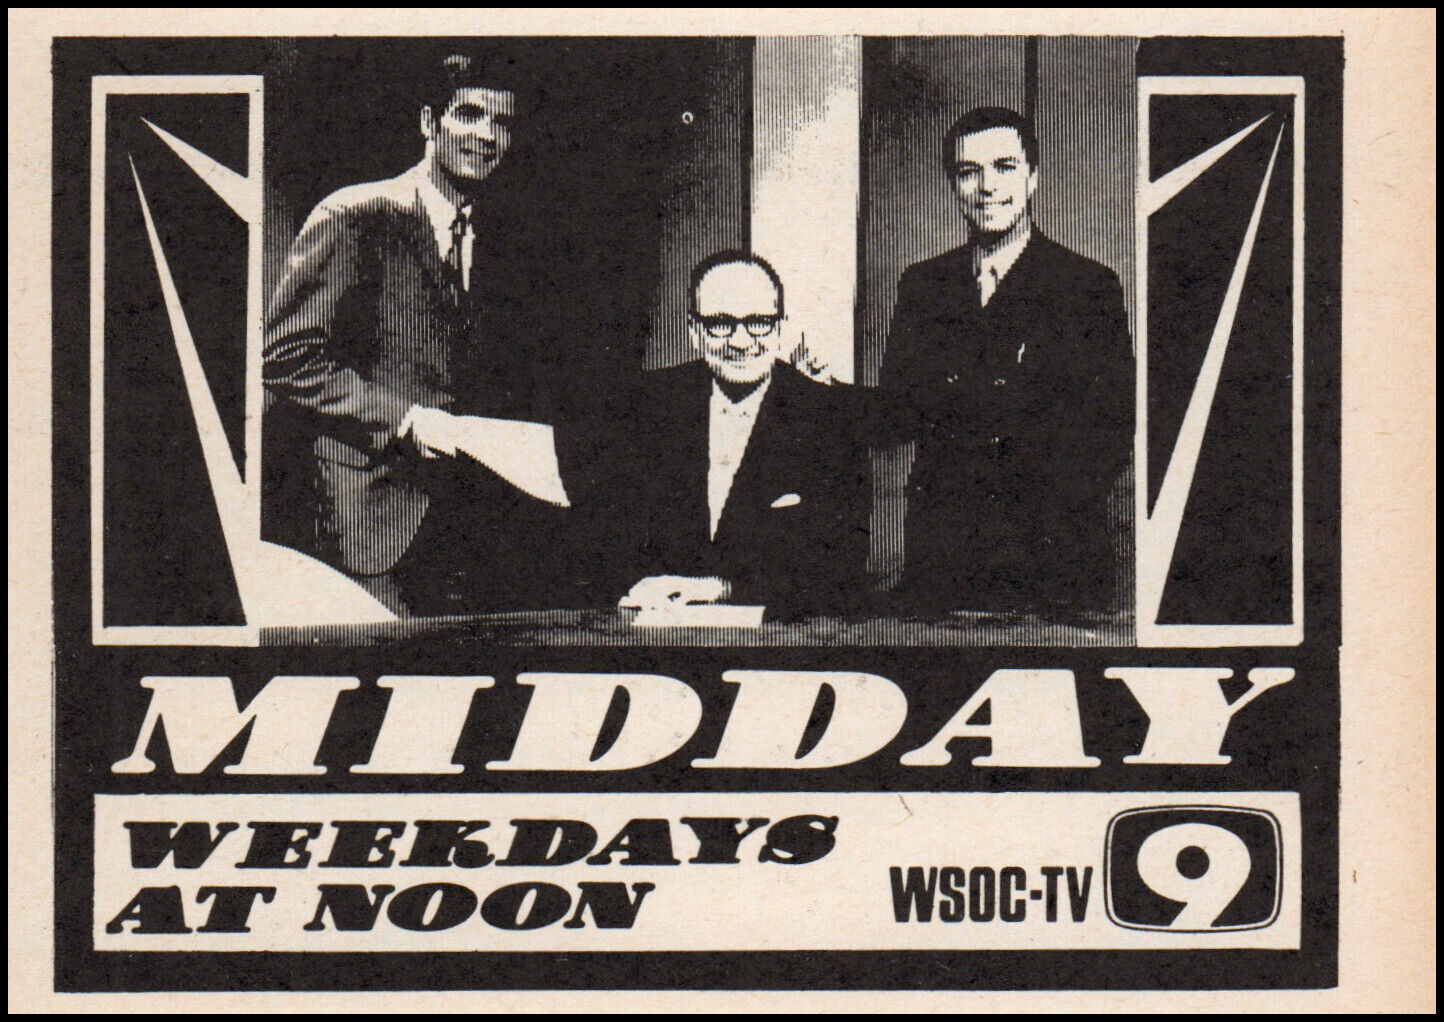 1969 WSOC-TV 9 Midday News Charlotte NC weekdays at noon tv guide promo ad  TV8